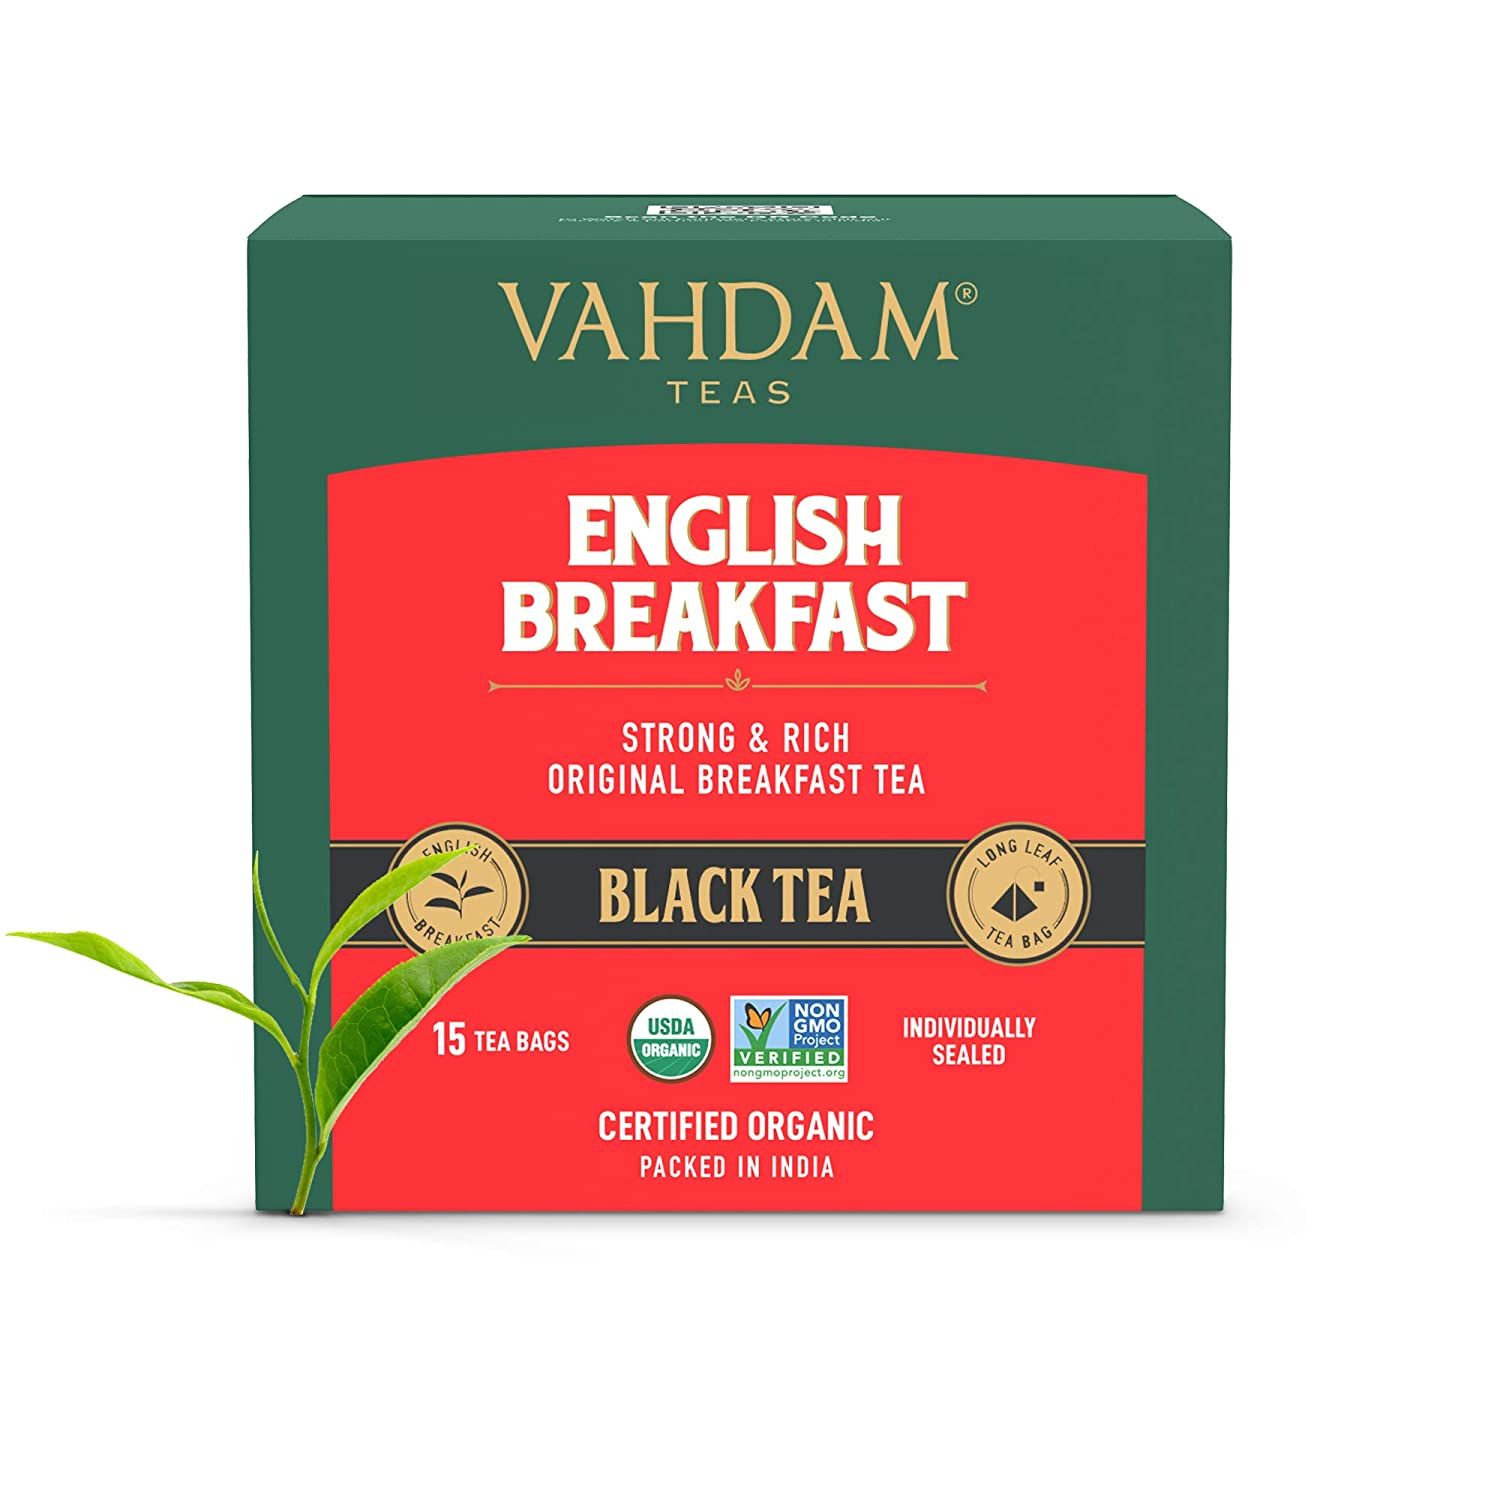 Vahdam English Breakfast Tea Image